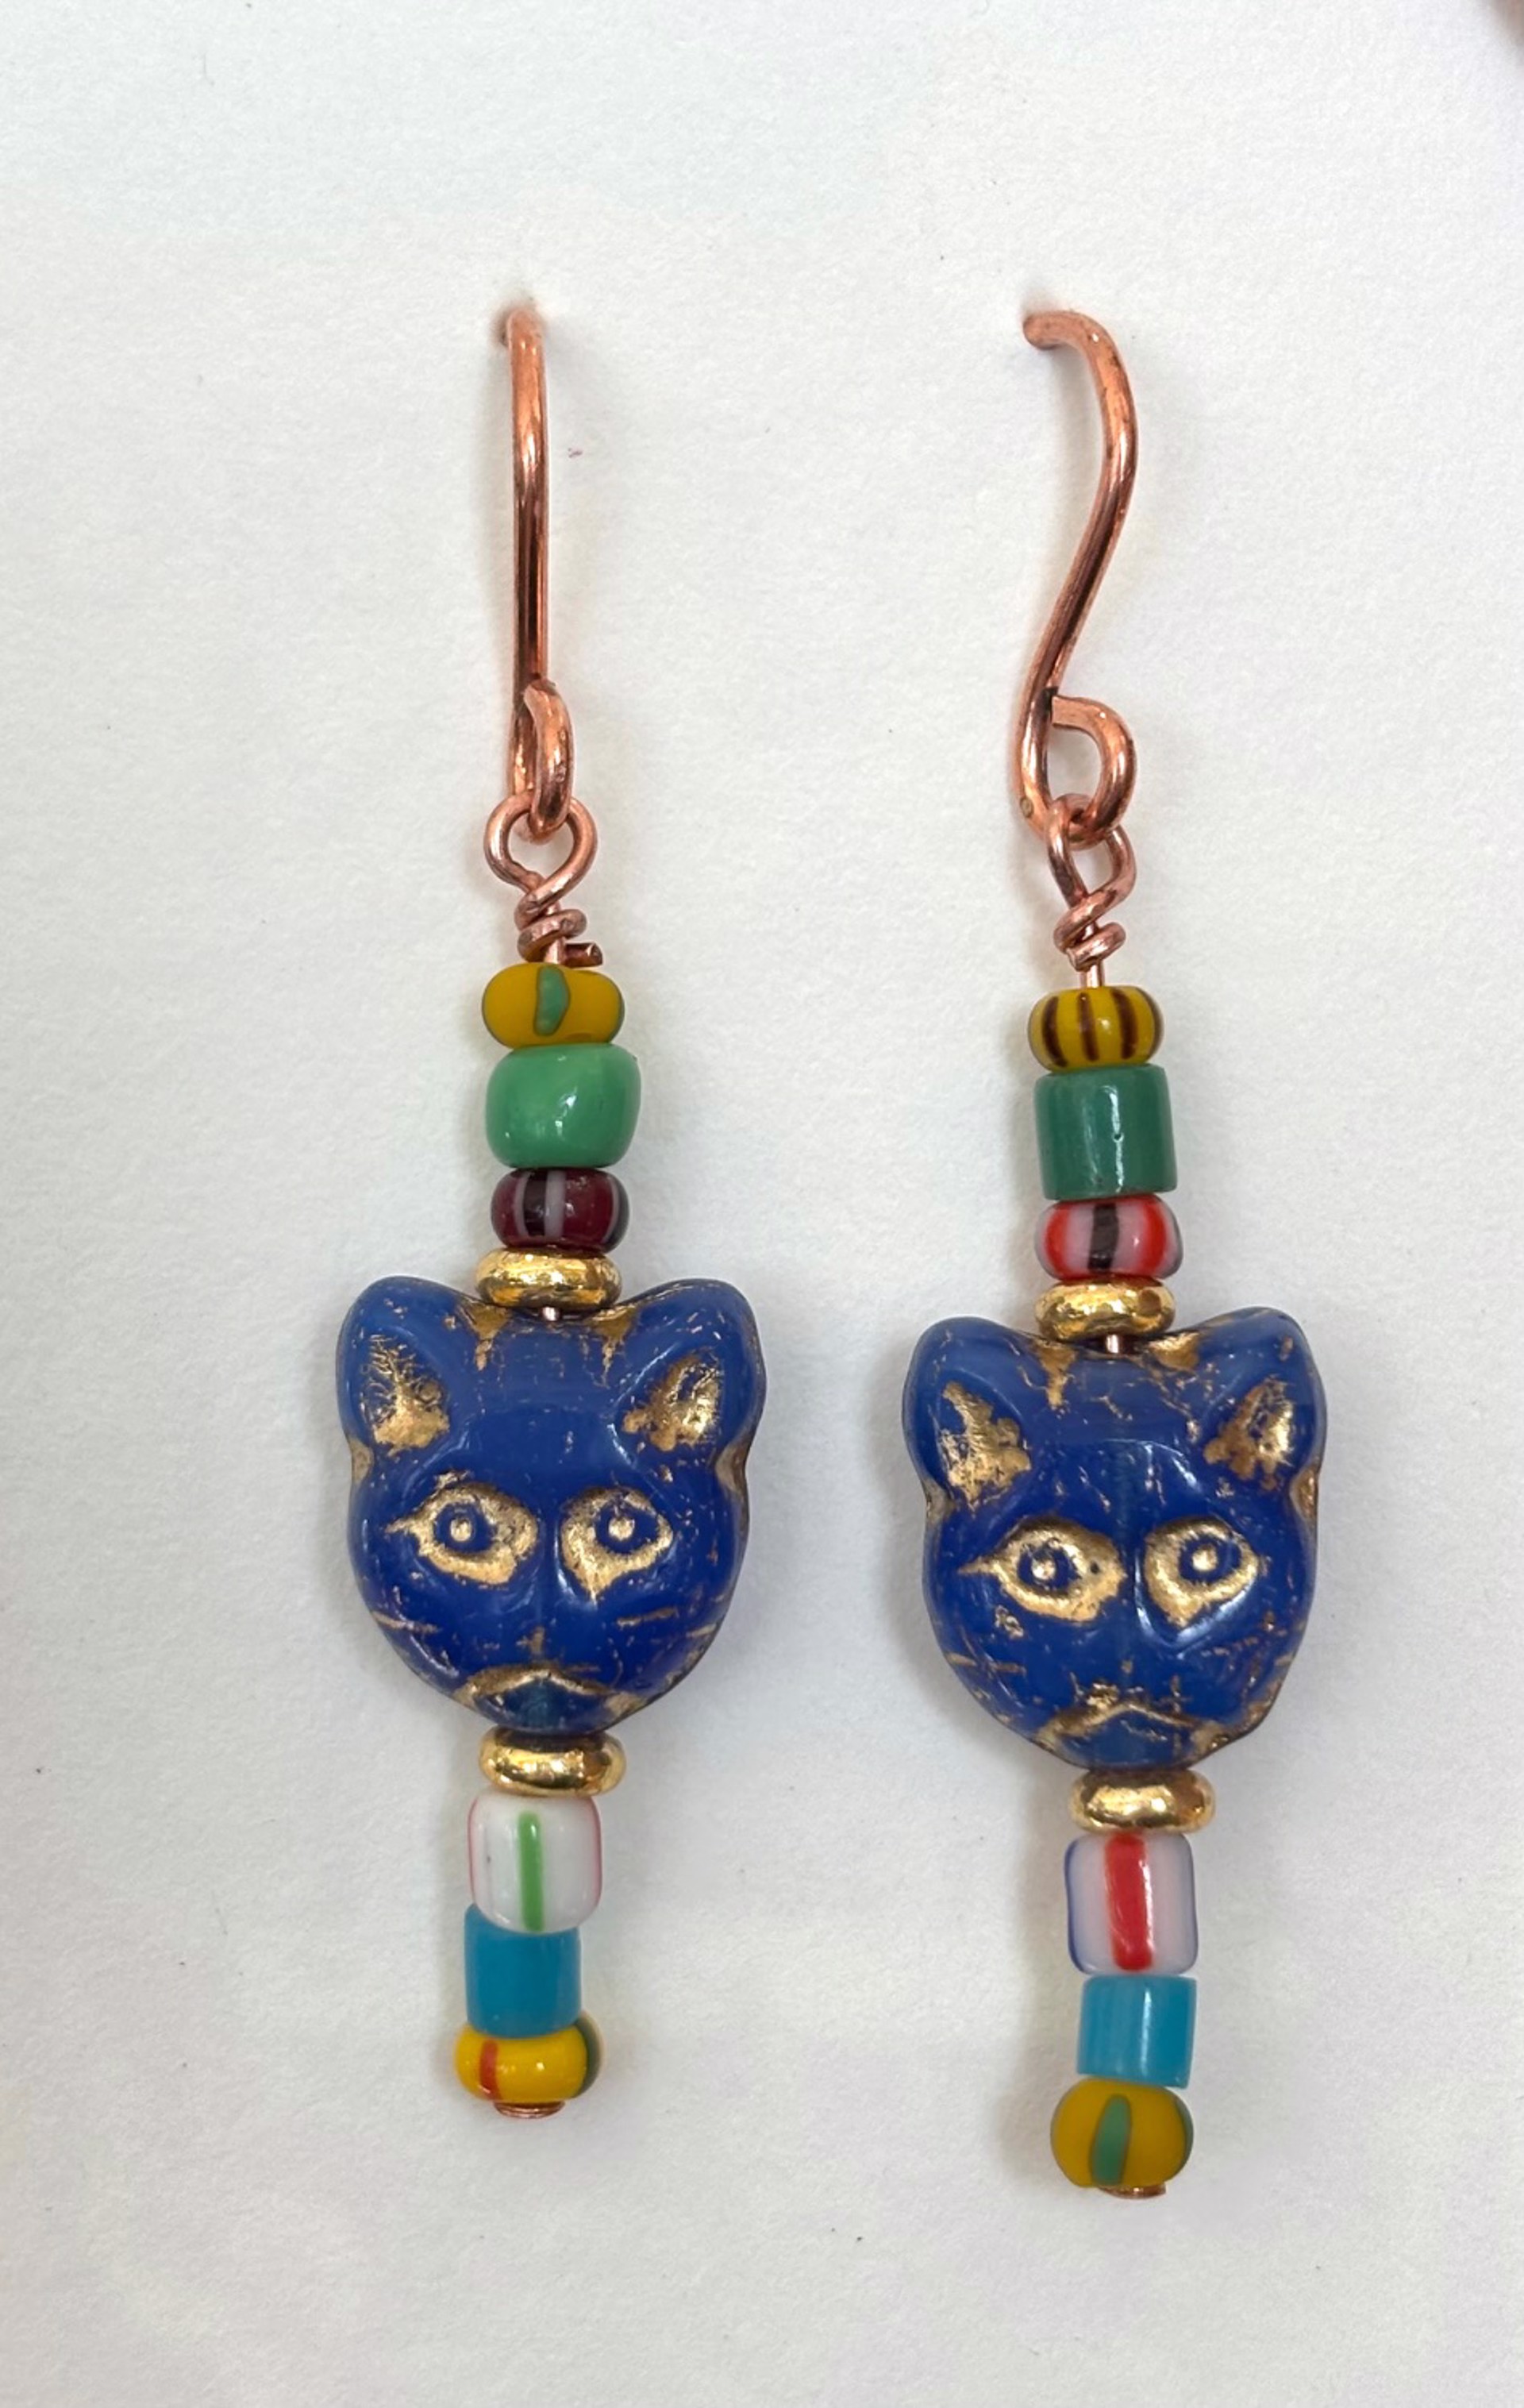 Blue Cat and Copper Earrings by Emelie Hebert